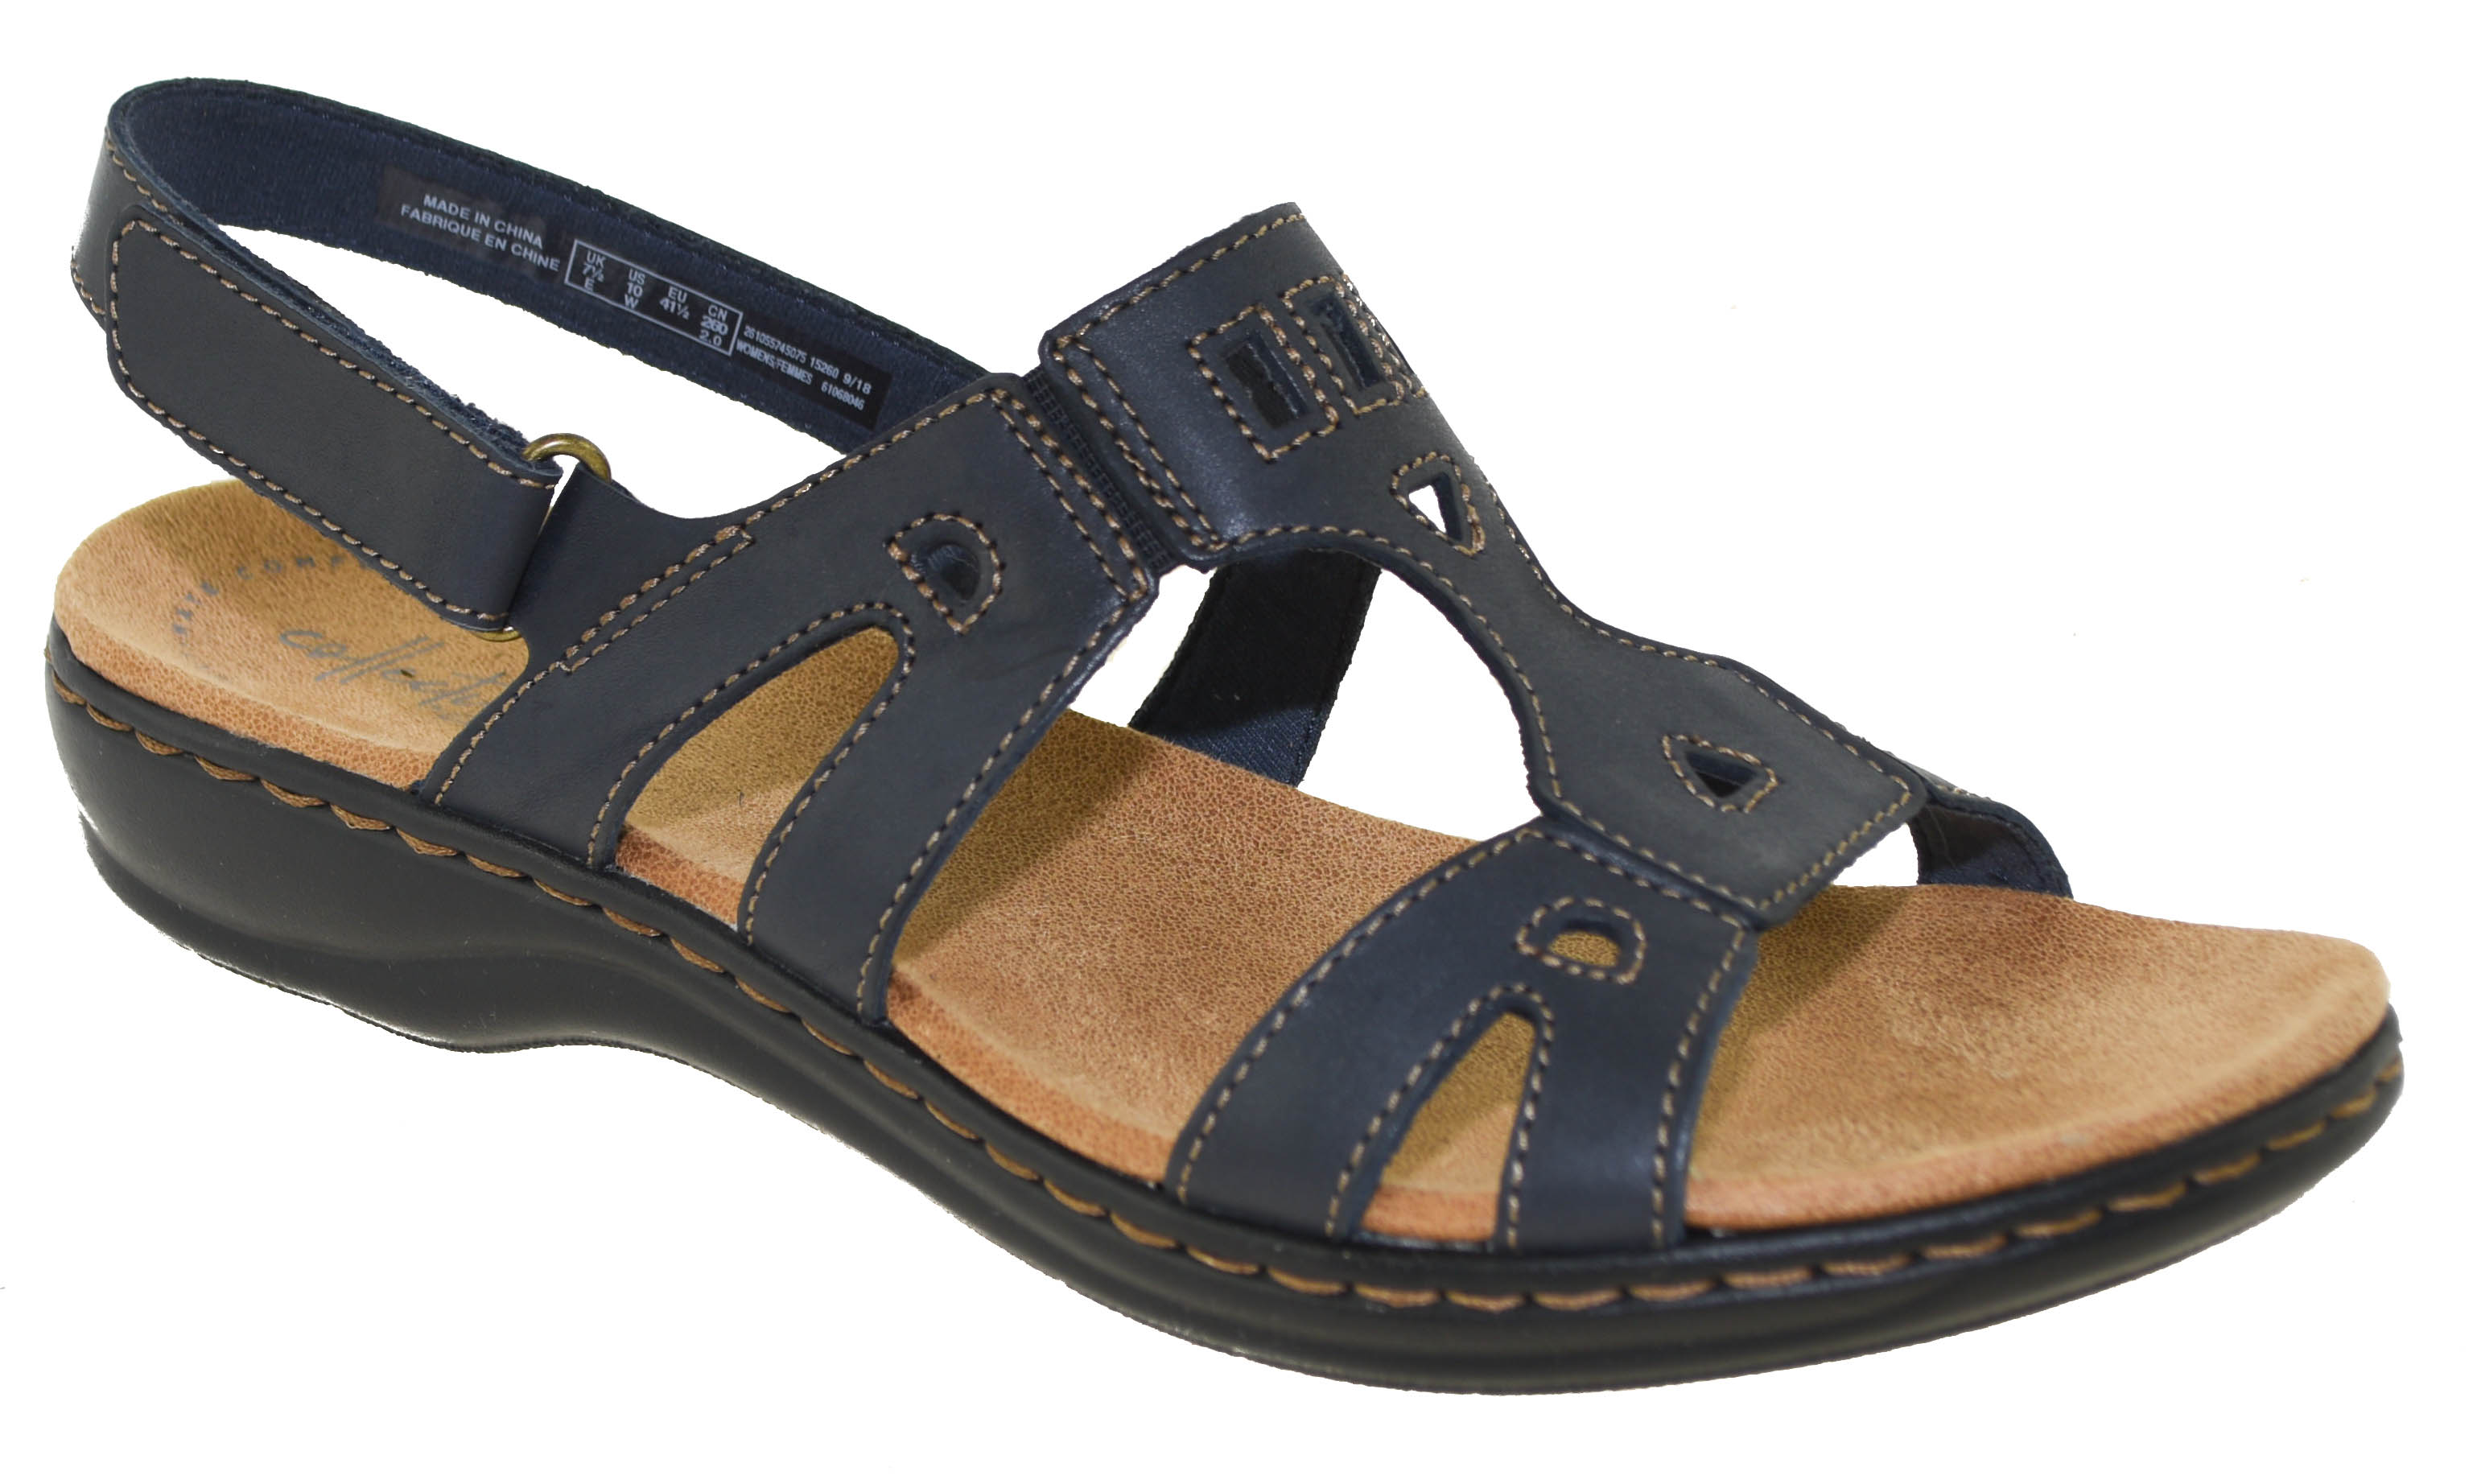 Clarks Women's Leisa Annual Sandal Navy Leather Style 05574 | eBay